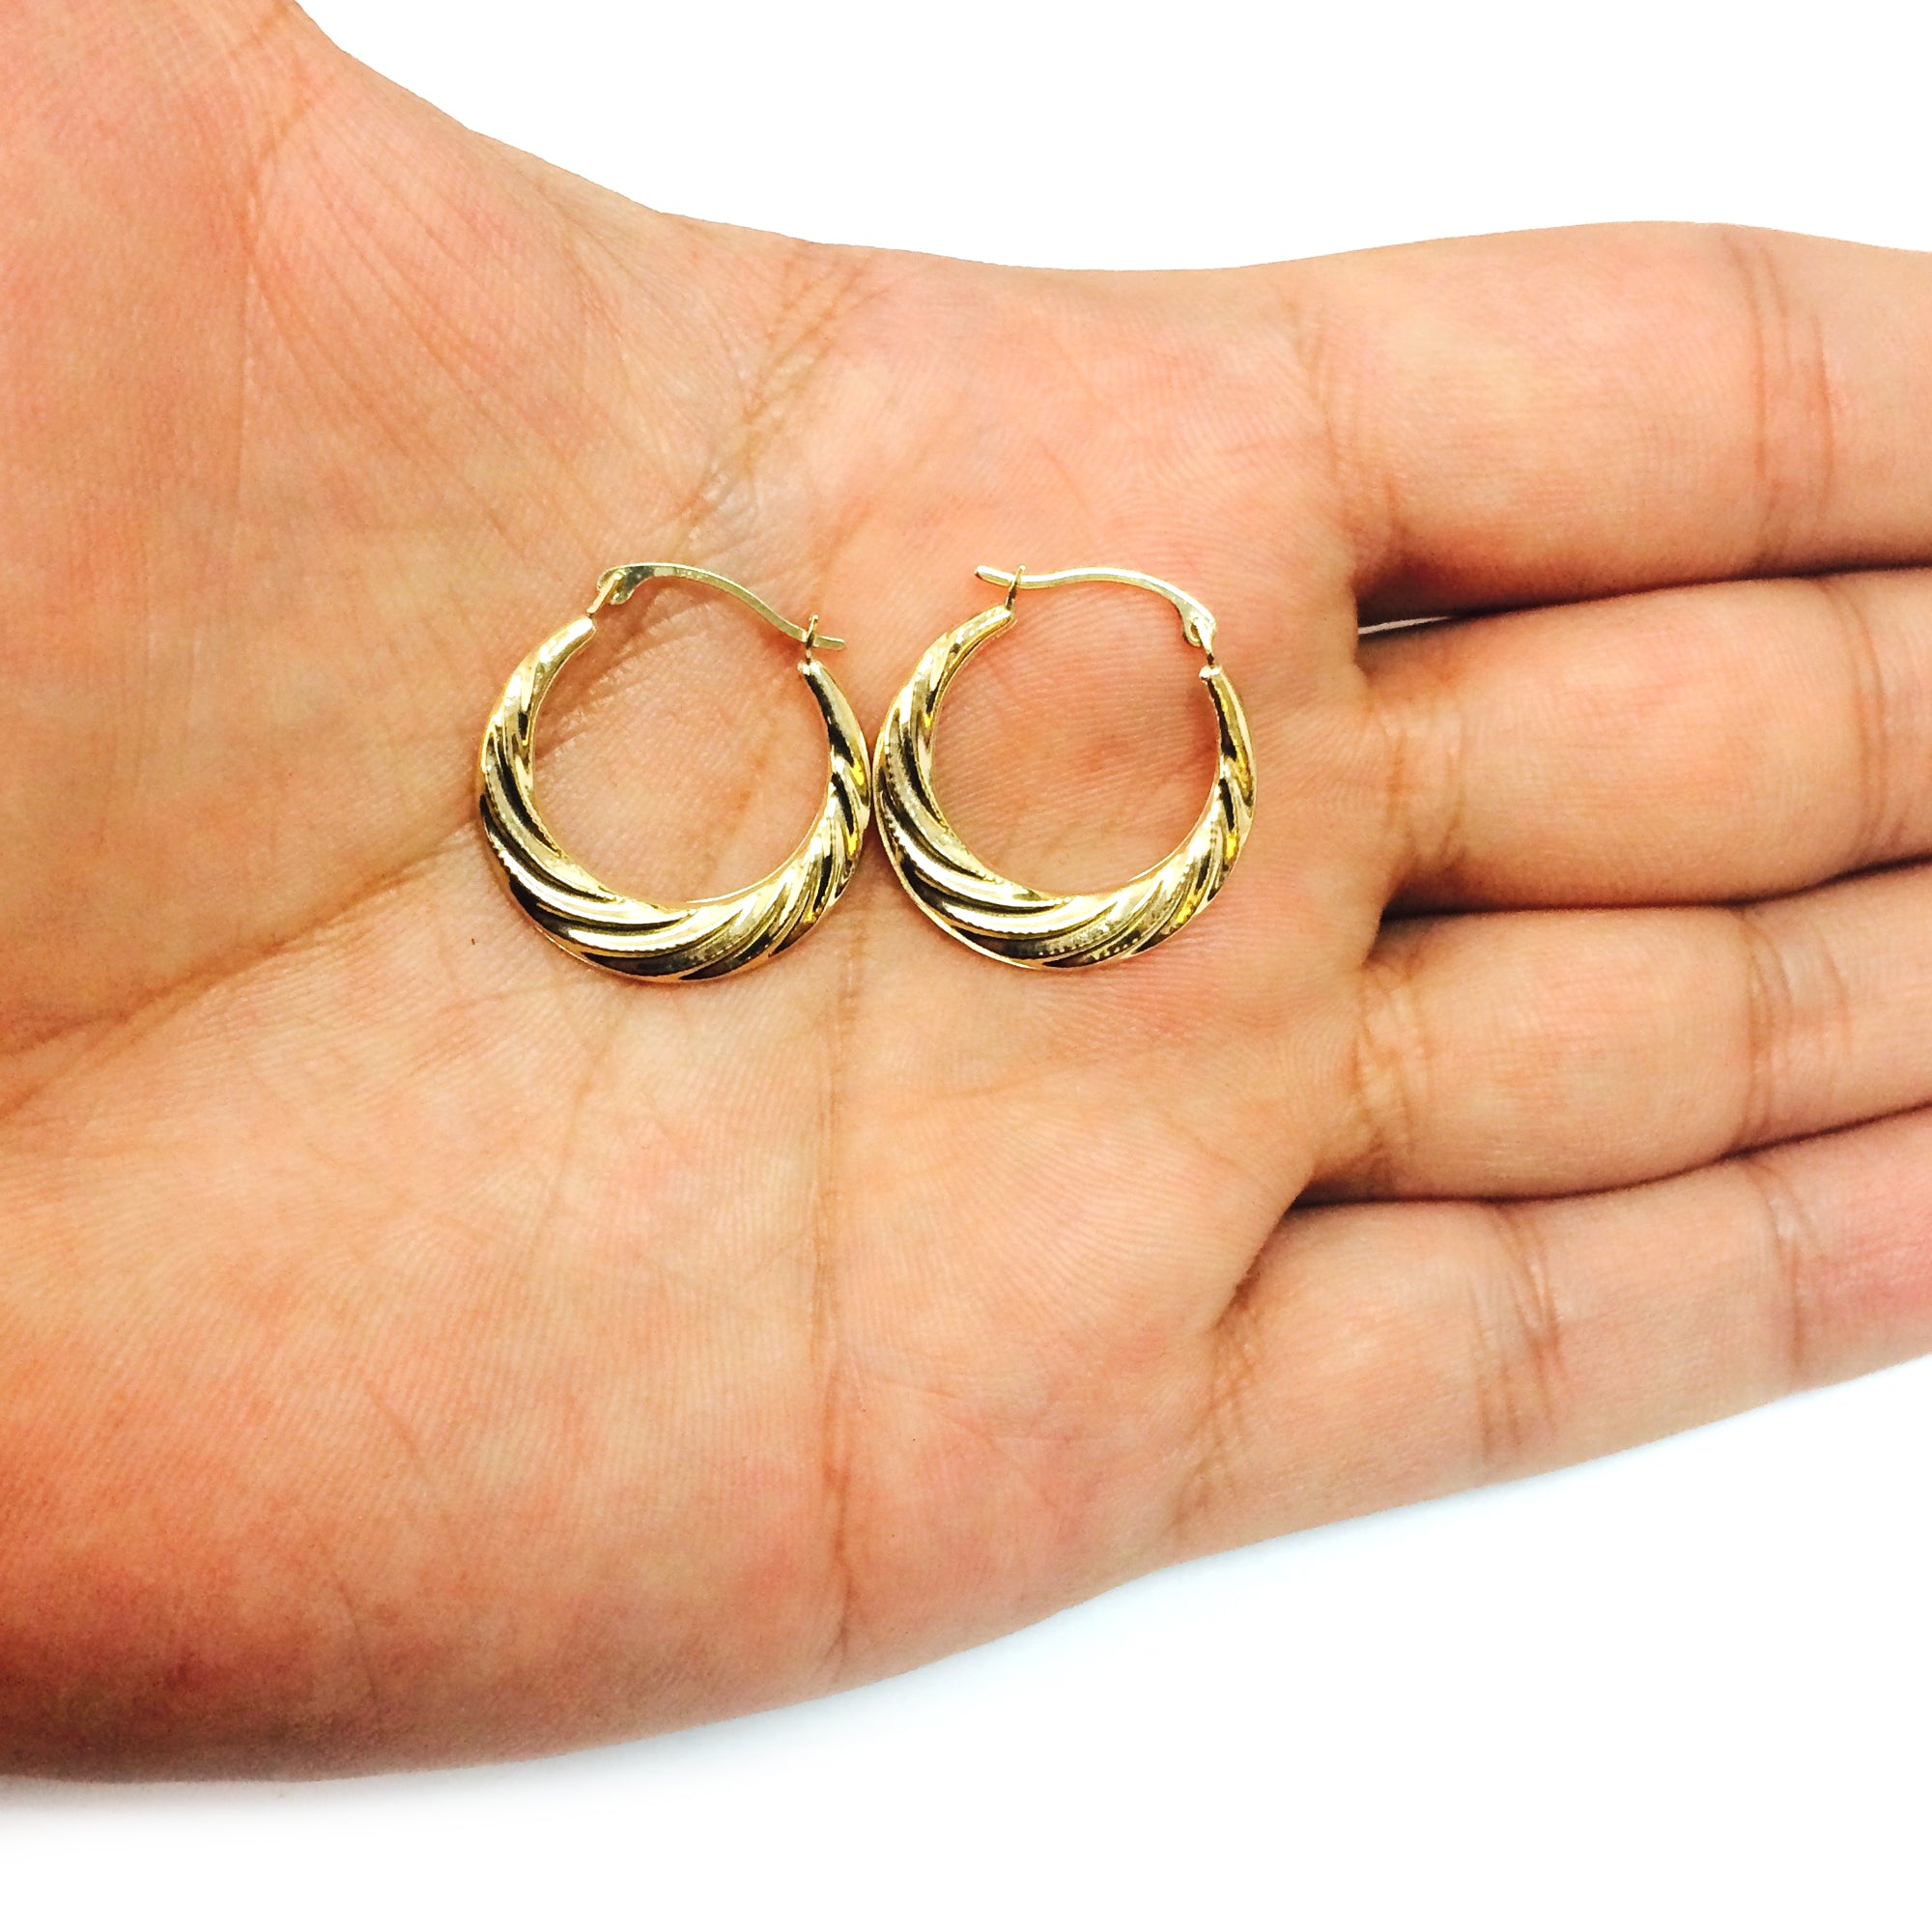 Yhpup 316 Stainless Steel Hoop Earrings Moon Star Sun Female Fashion Round  Circle Geometric Earrings Jewelry For Women